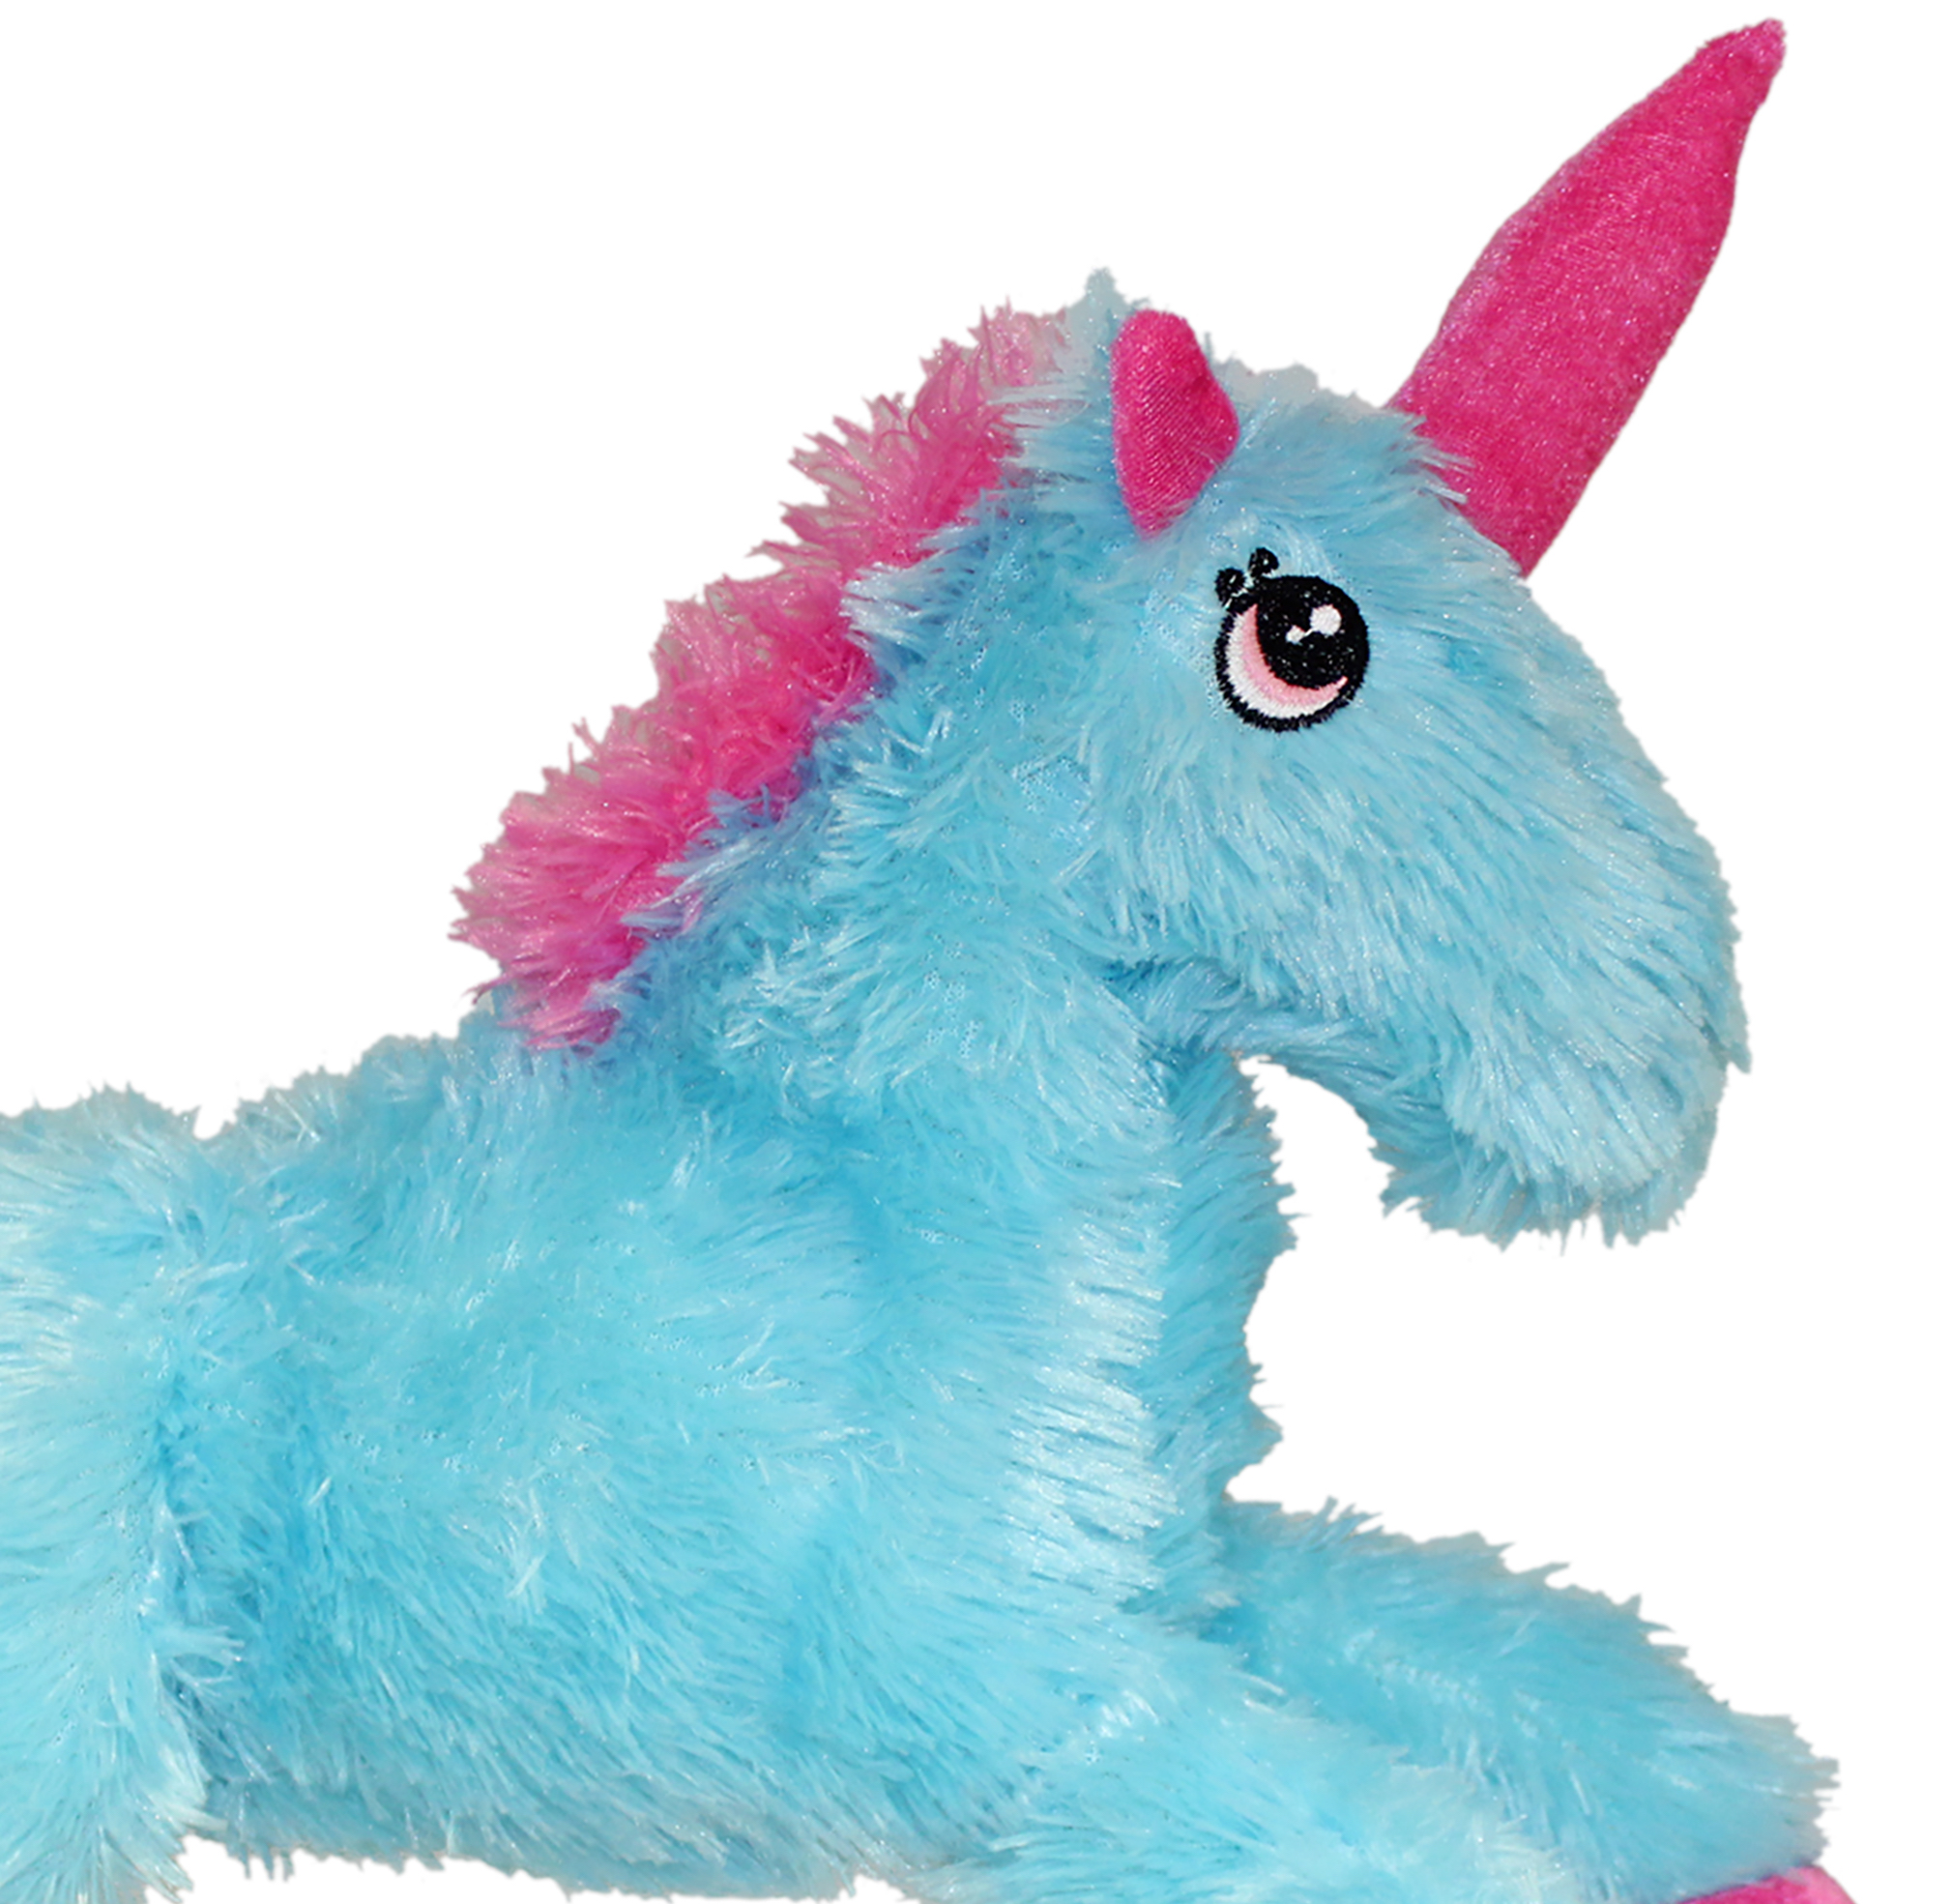 Whimsy & Charm Valentine's Day Sweatheart Love 22" Unicorn Stuffed Animal Plush Toy Soft & Fluffy - Blue - image 2 of 6